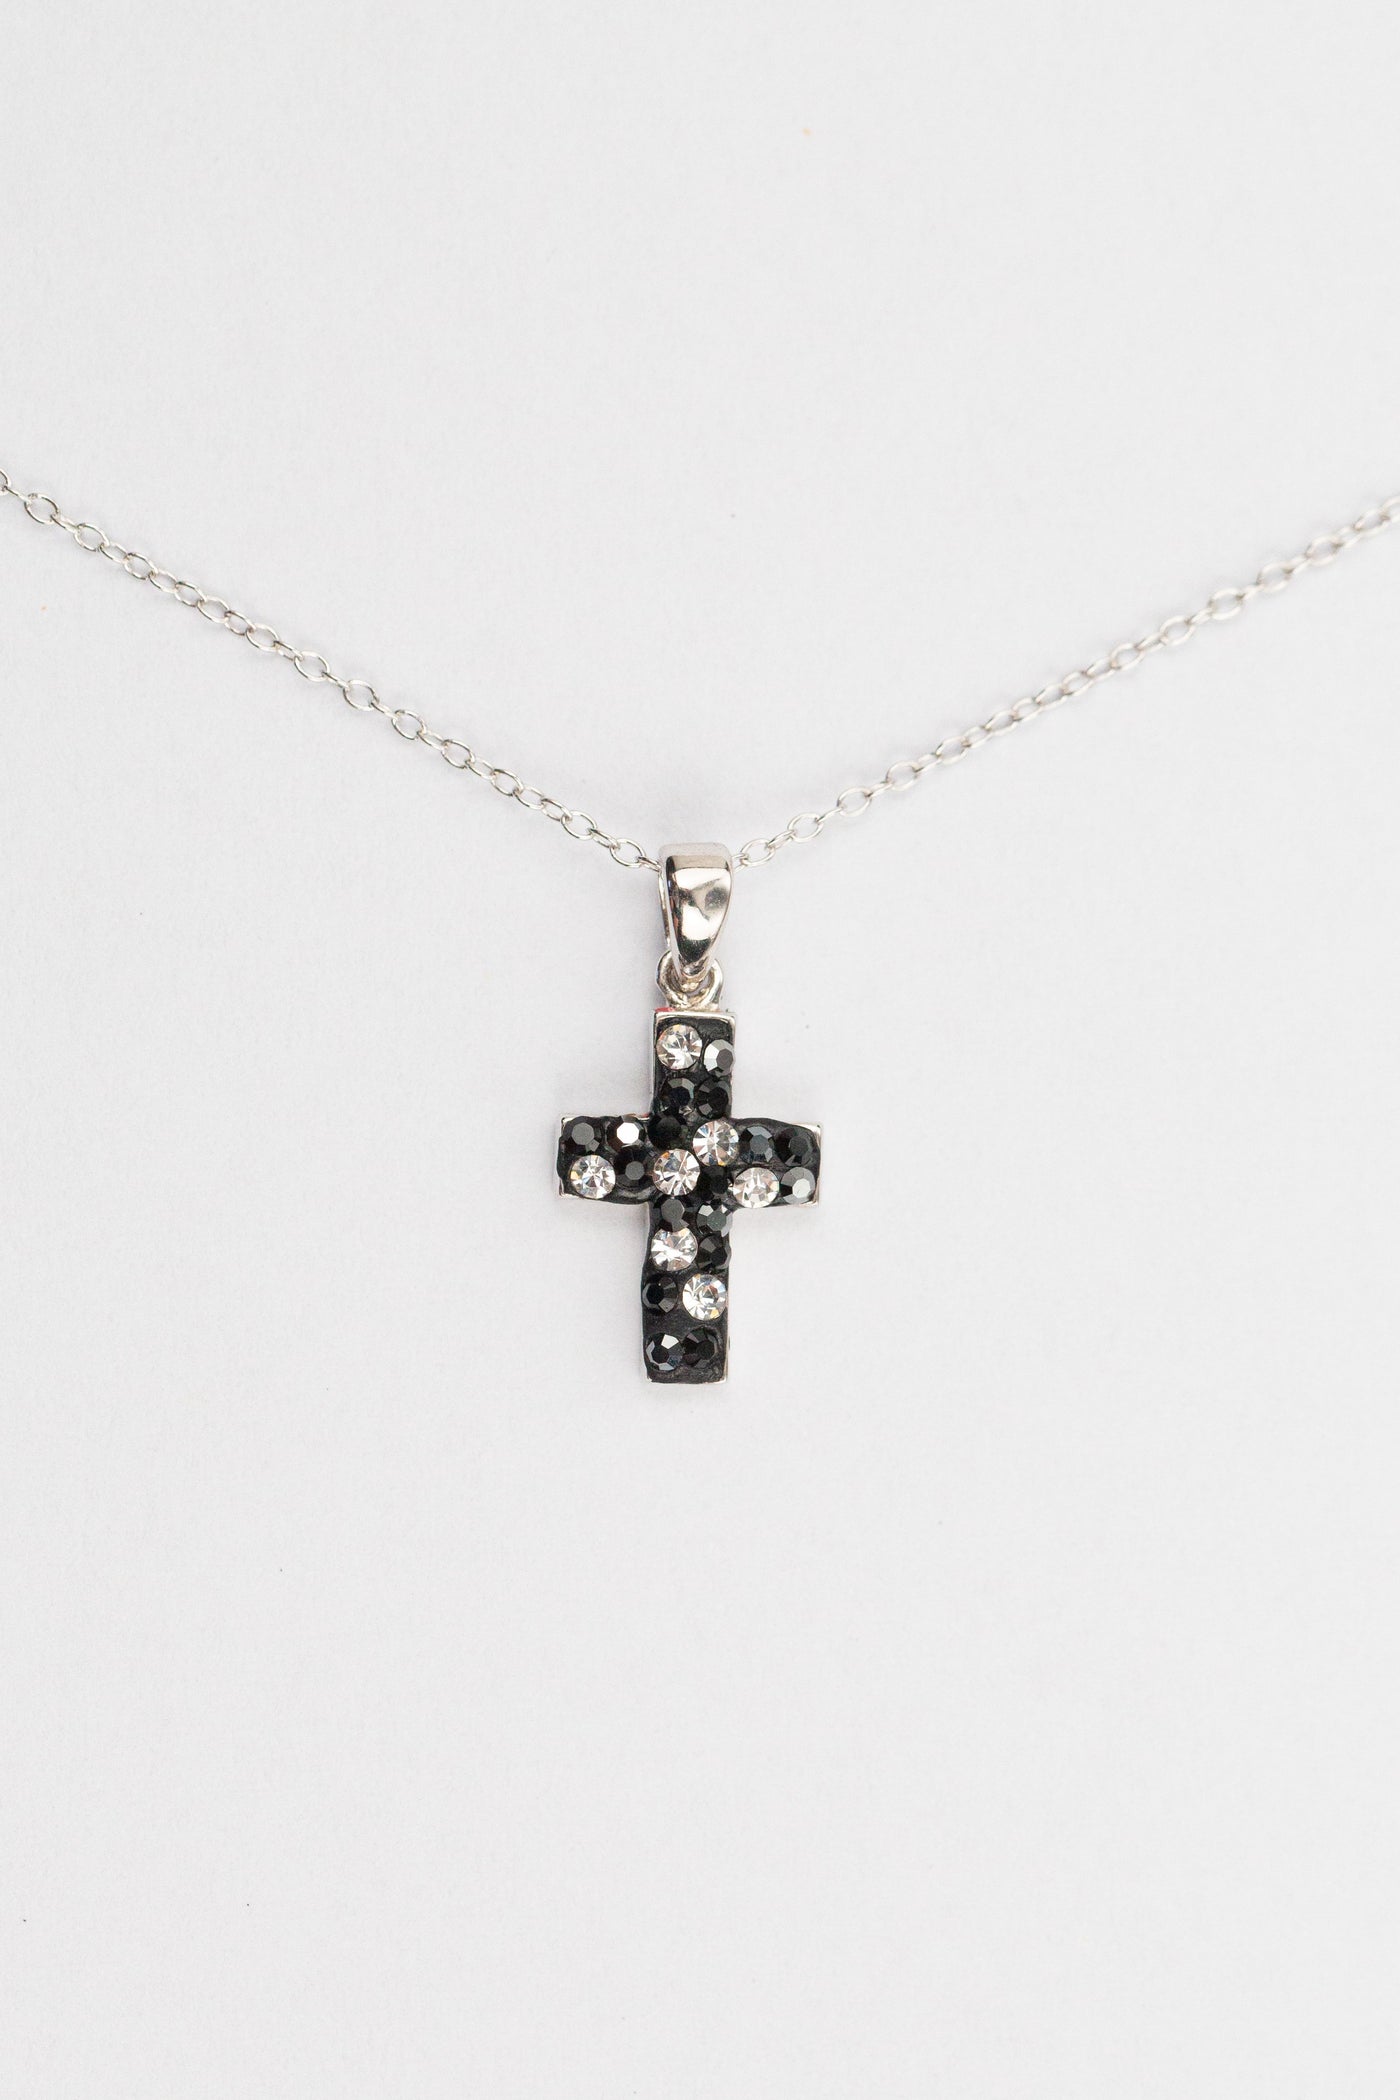 Silver Celtic Cross Adorned With Swarovski Crystals | Blarney